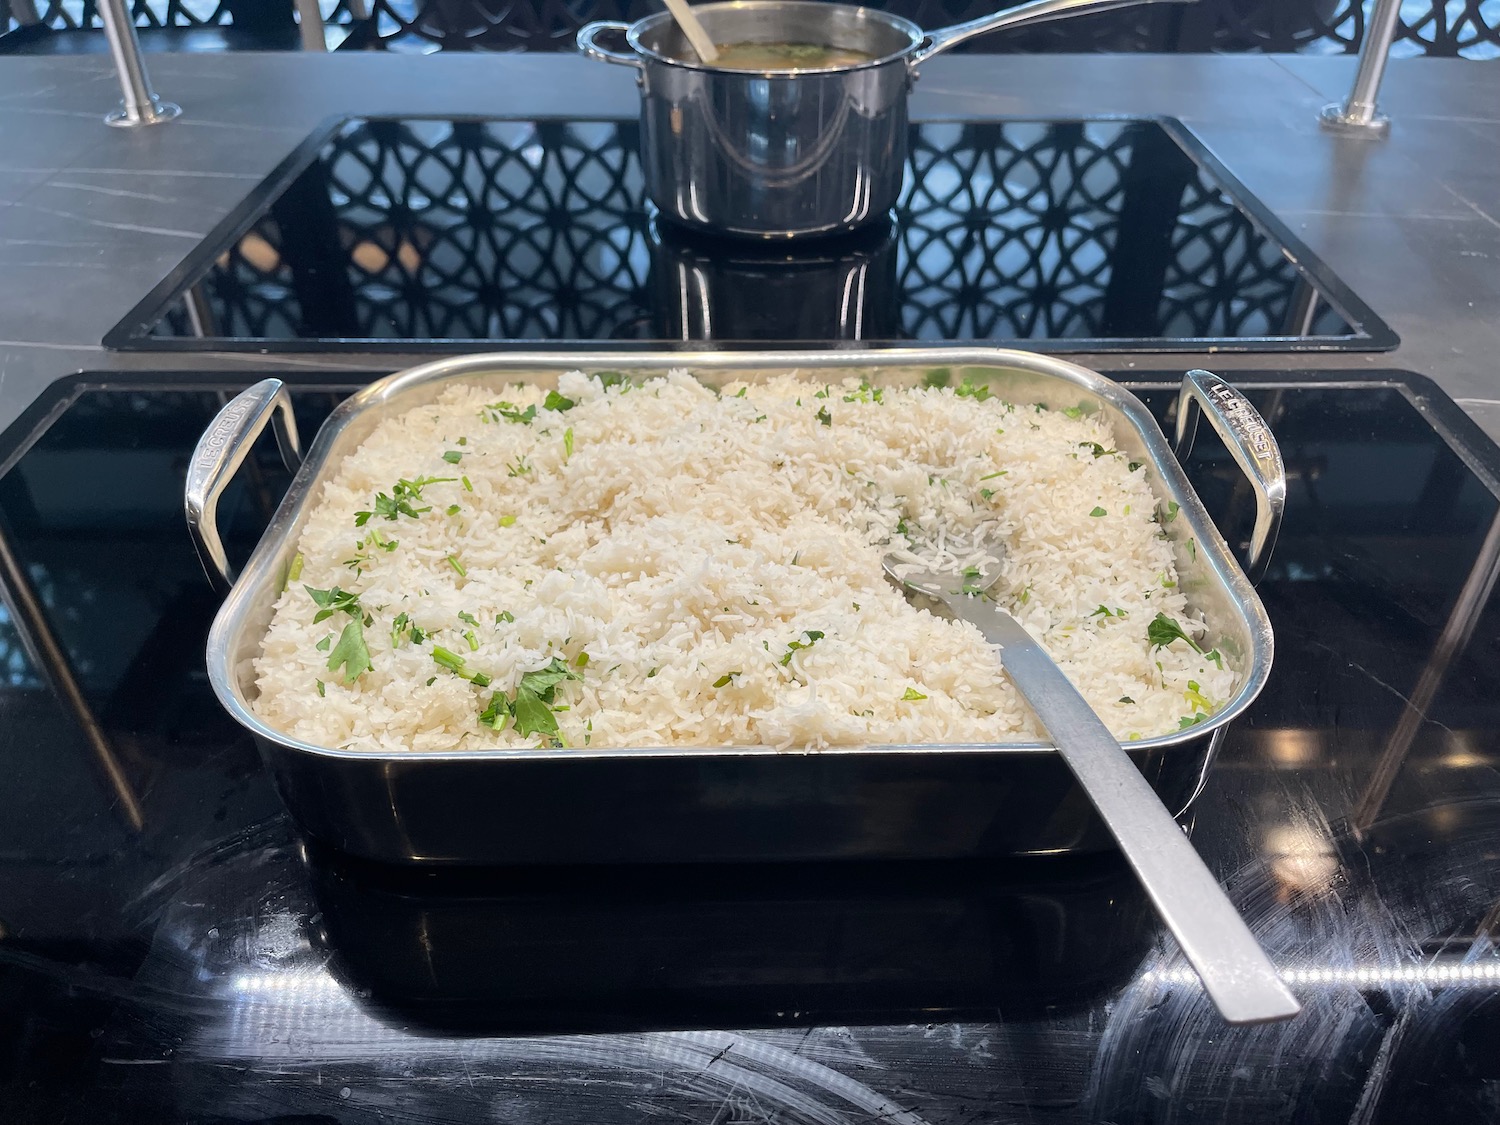 a pan of rice and a pot of soup